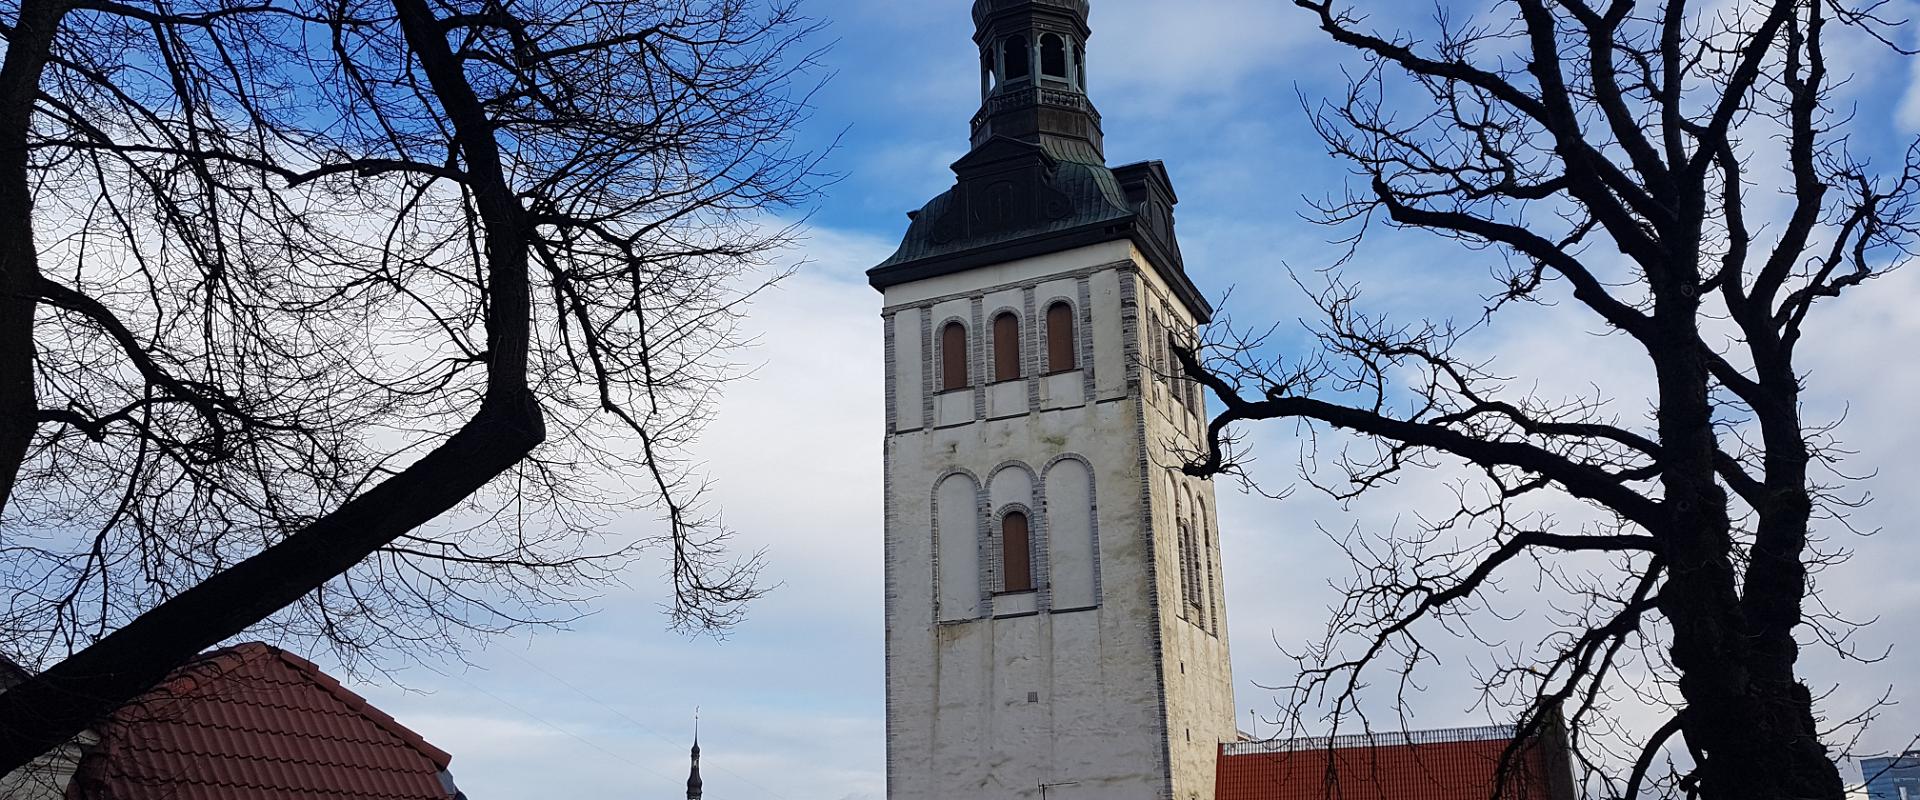 Tallinna kirikute tuur giidiga